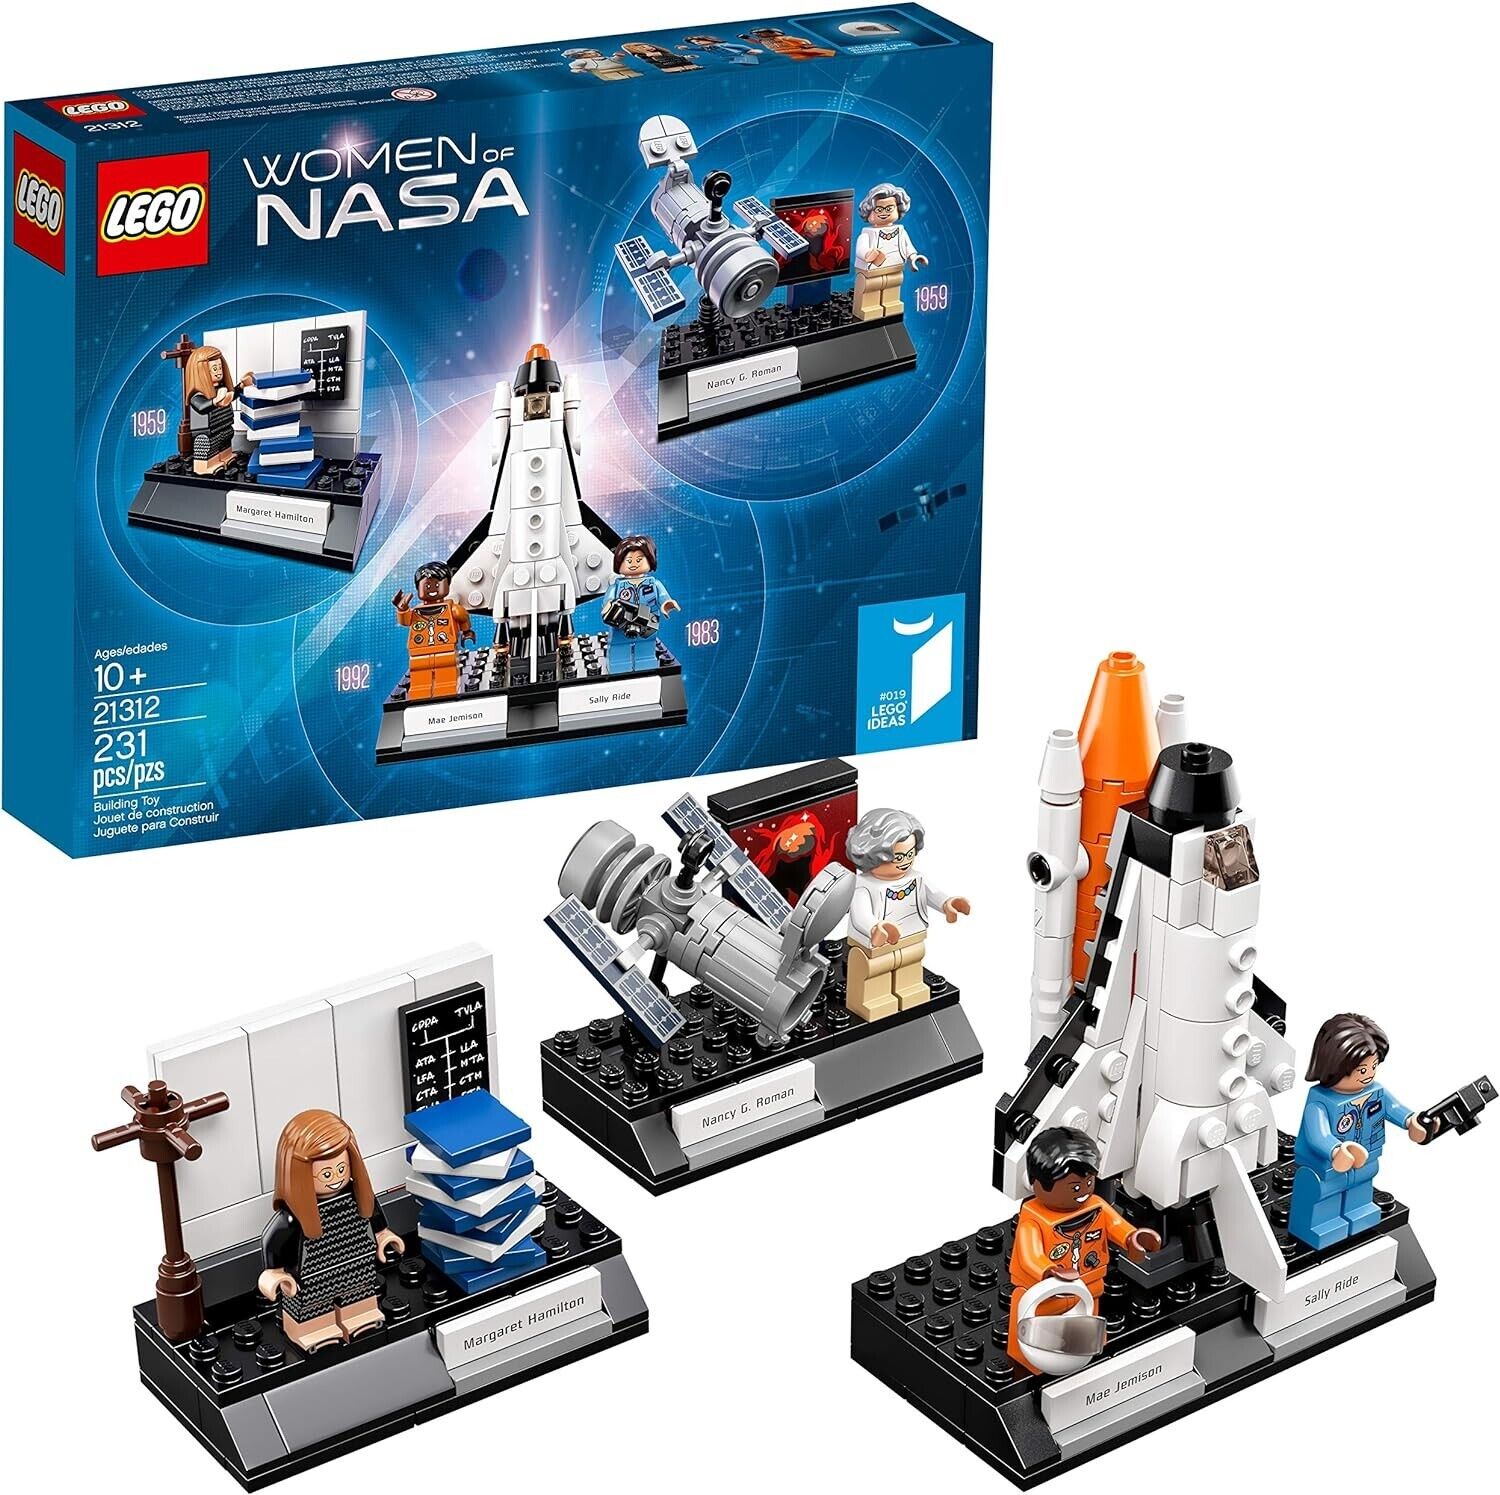 LEGO IDEAS Women of NASA 21312 Astronaut Hubble Space Telescope Space Shuttle